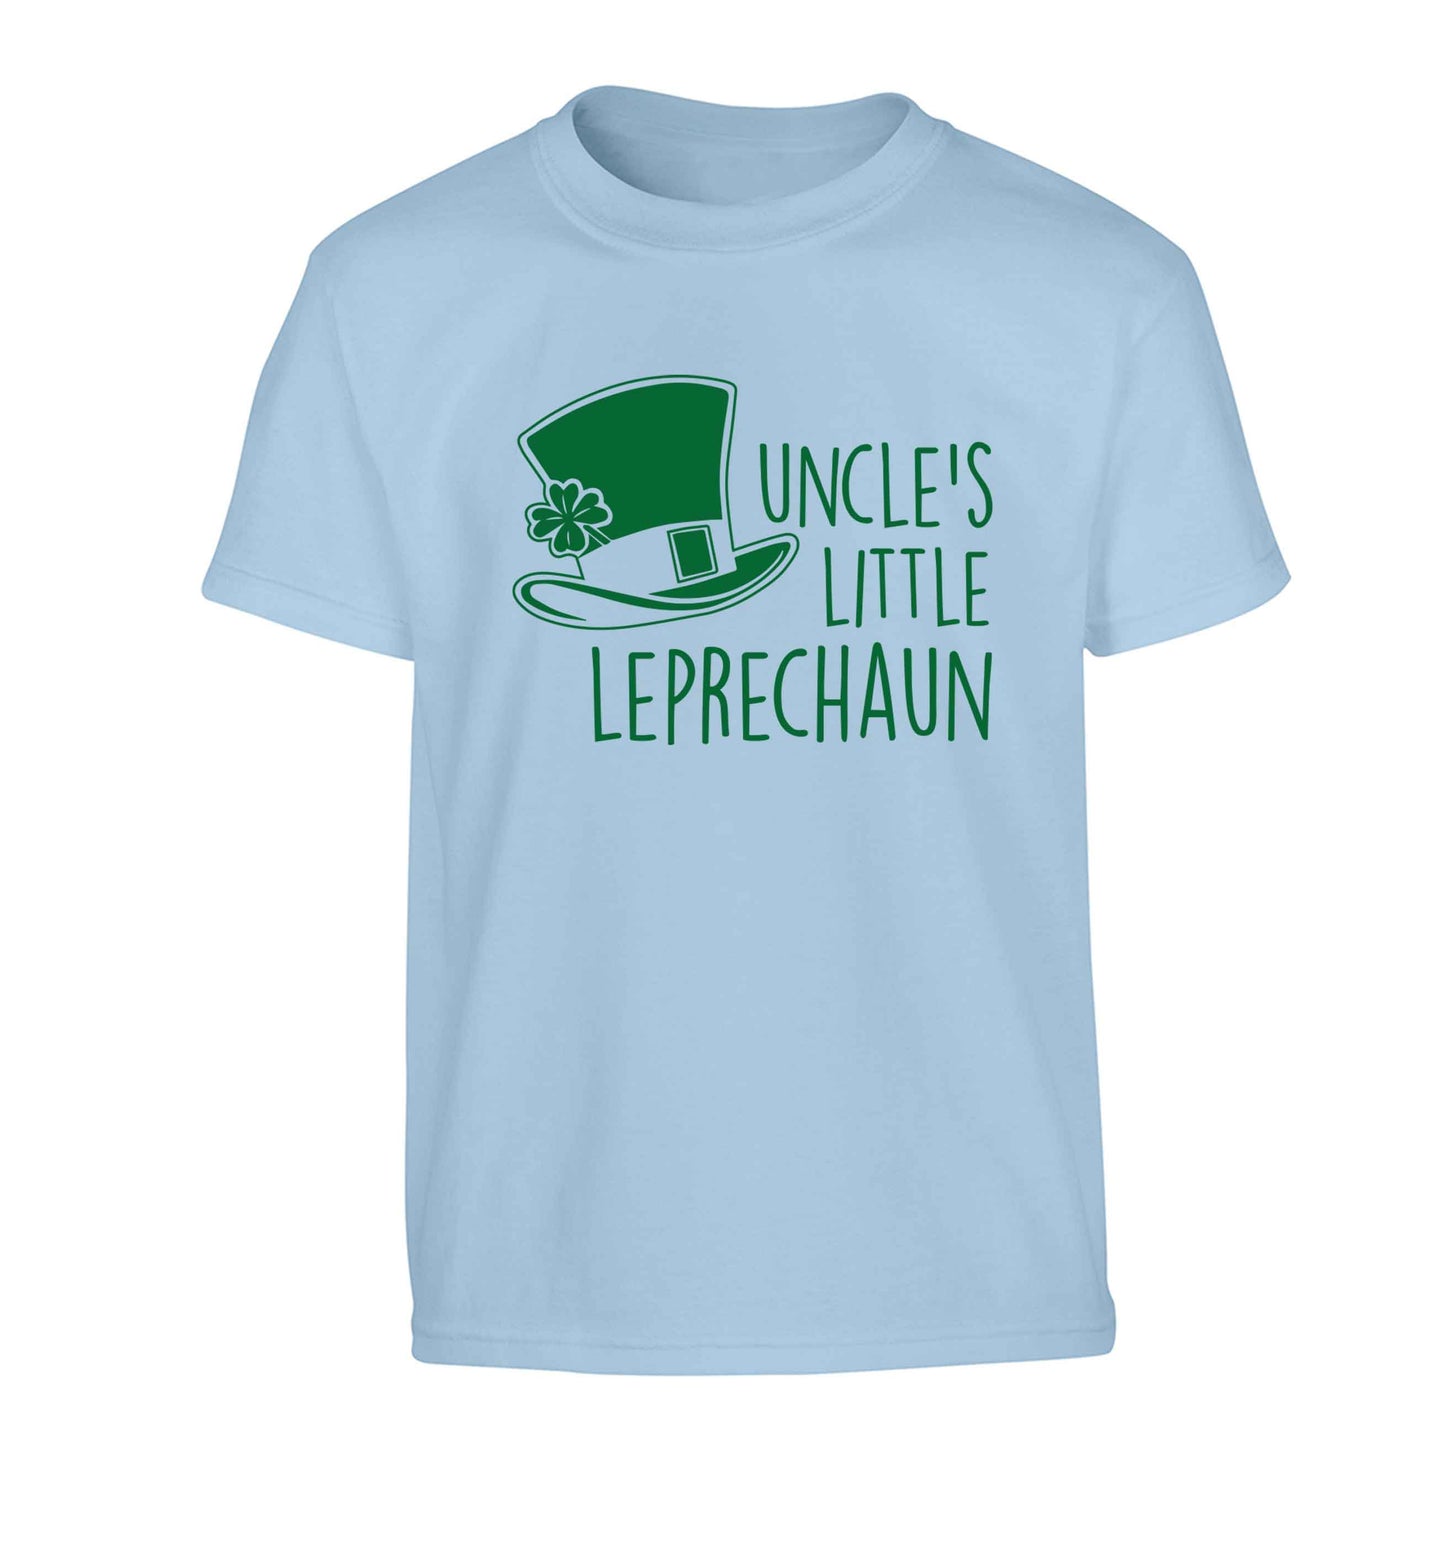 Uncles little leprechaun Children's light blue Tshirt 12-13 Years